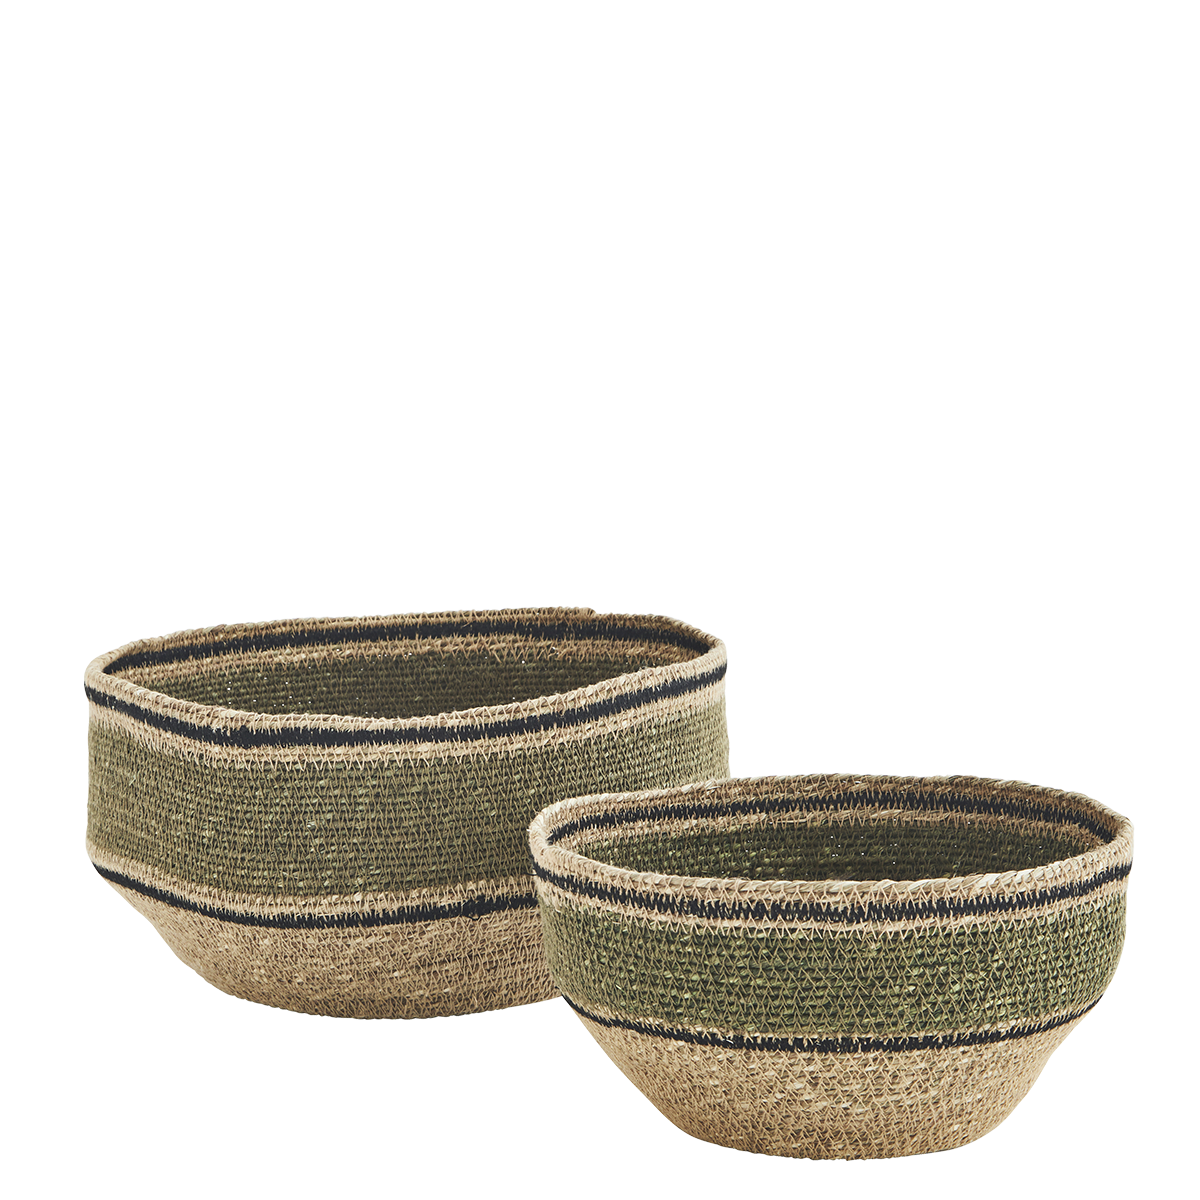 Seagrass bowls w/ stitching